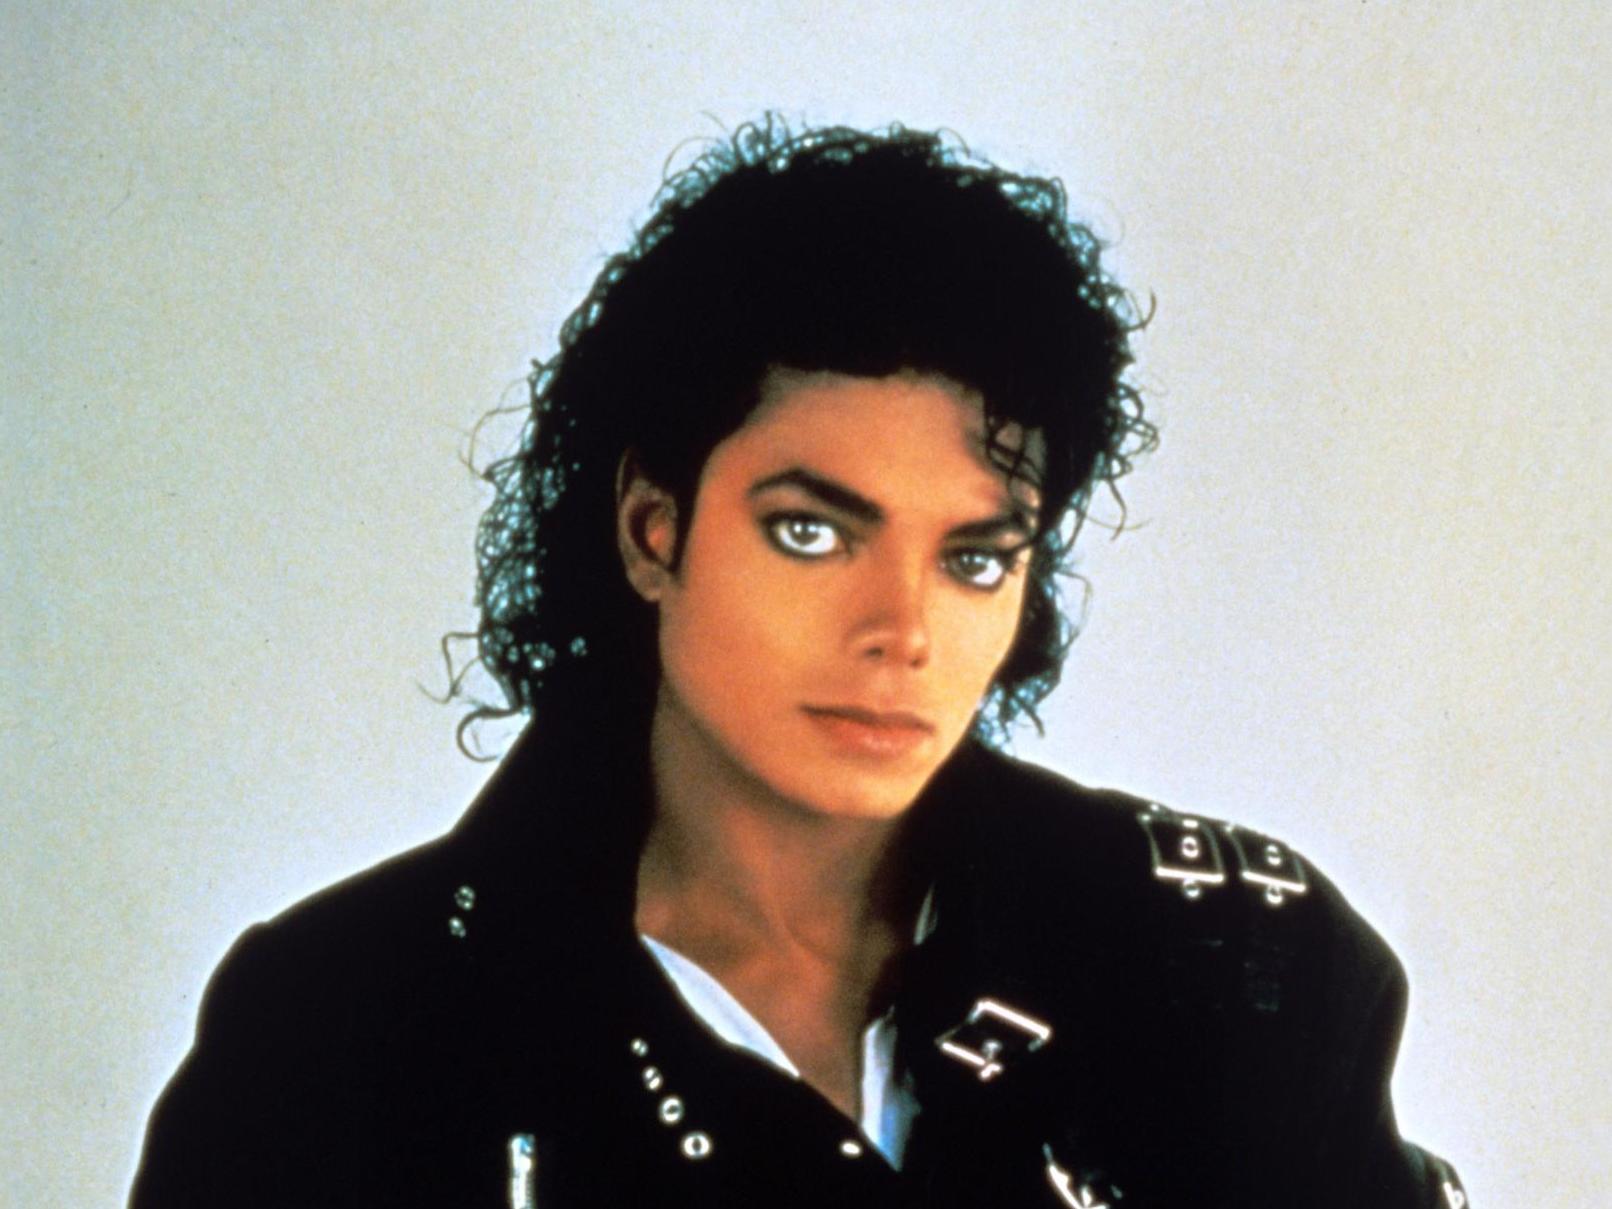 highest paid dead celebrities of 2020, Michael Jackson in black jacket